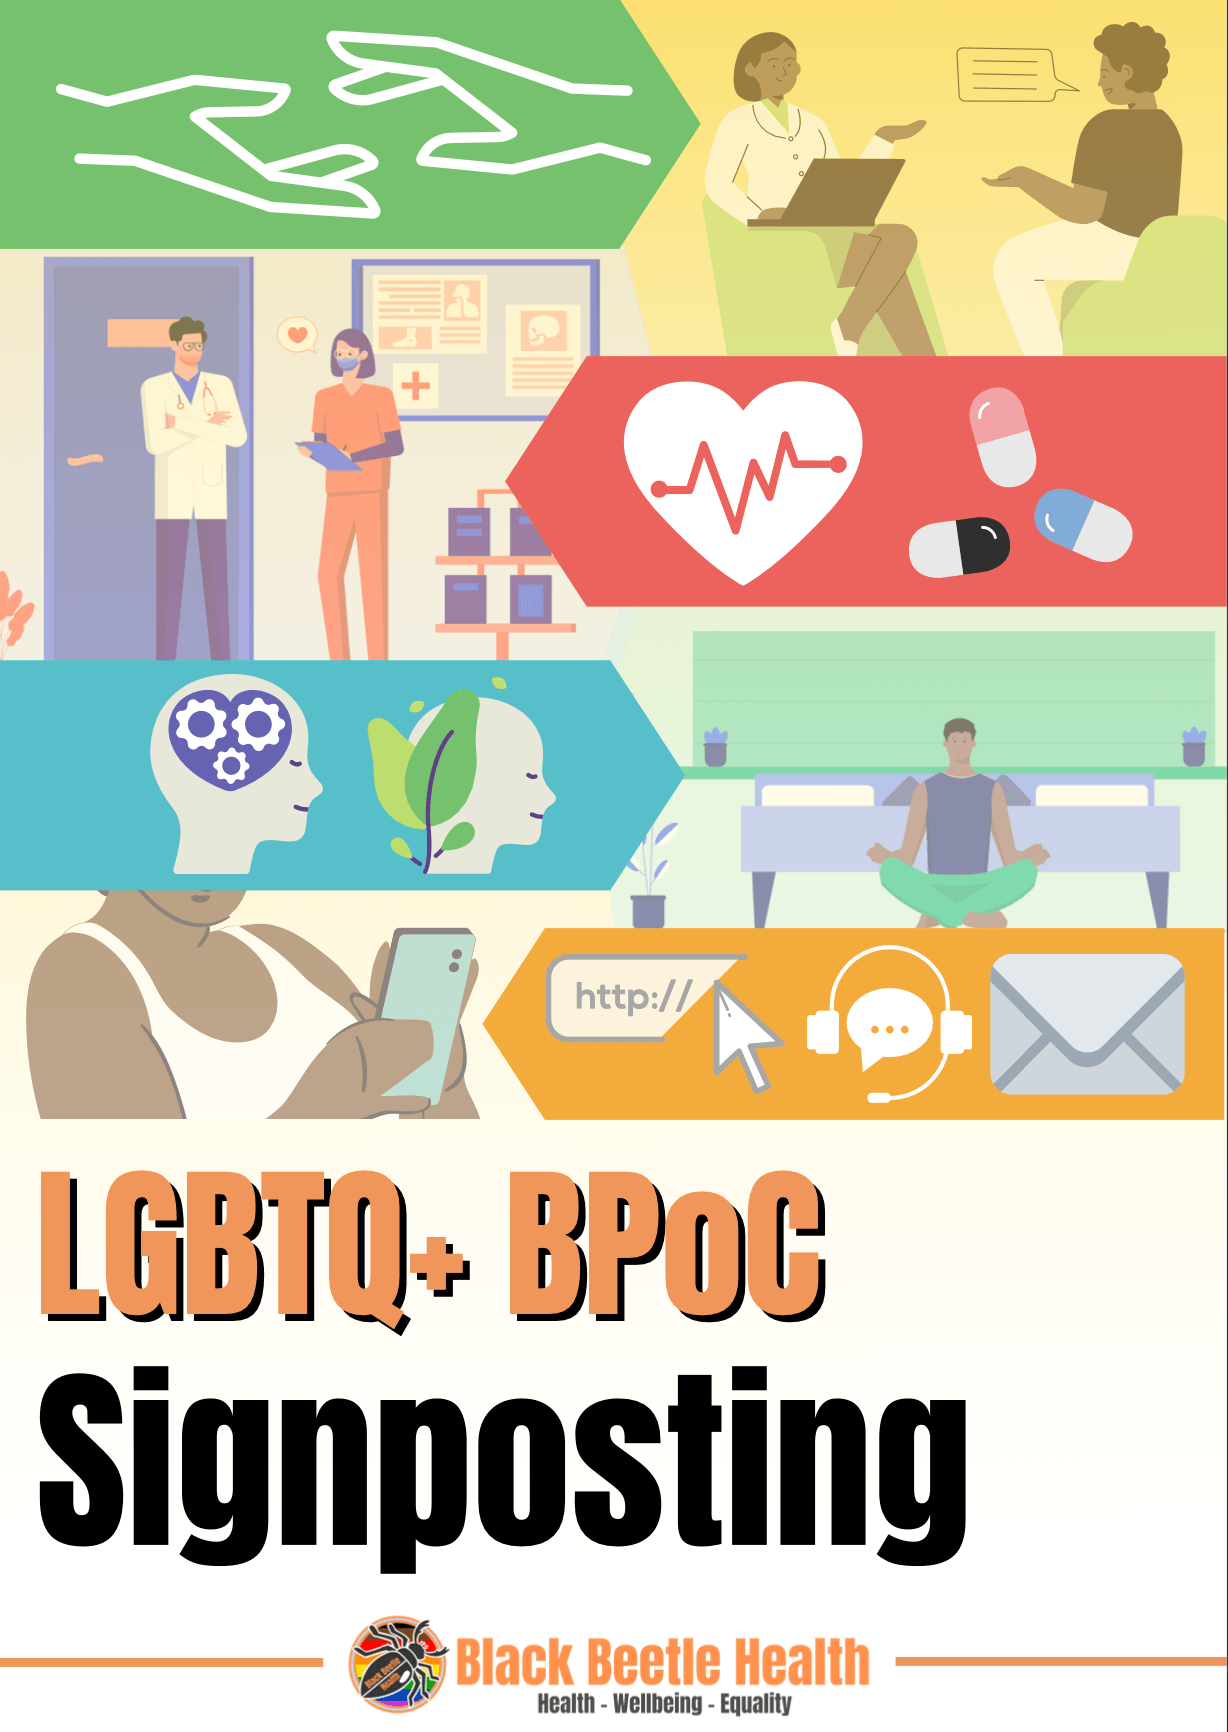 LGBTQ+ BPoC signposting guide